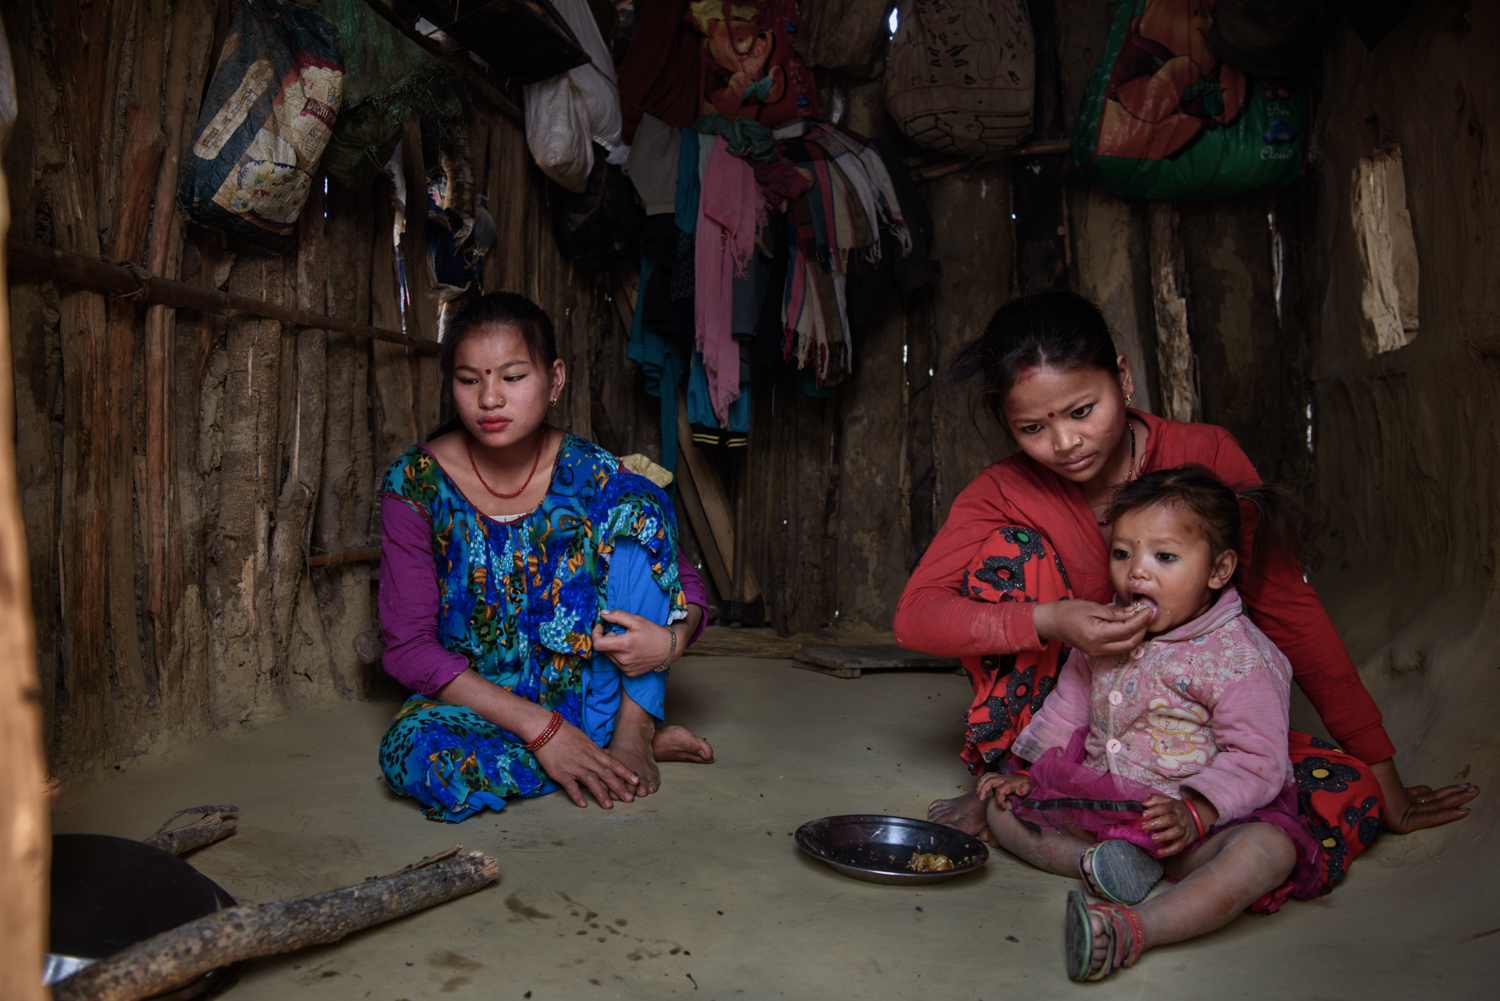  Ganga Maskimagar (17) helps her sister Kalpana Paharaimagar (19) at her home in Majhi Shivir, Chaumala, Kailali, Nepal. Both Ganga and Kalpana's husbands work in India to support their families. 